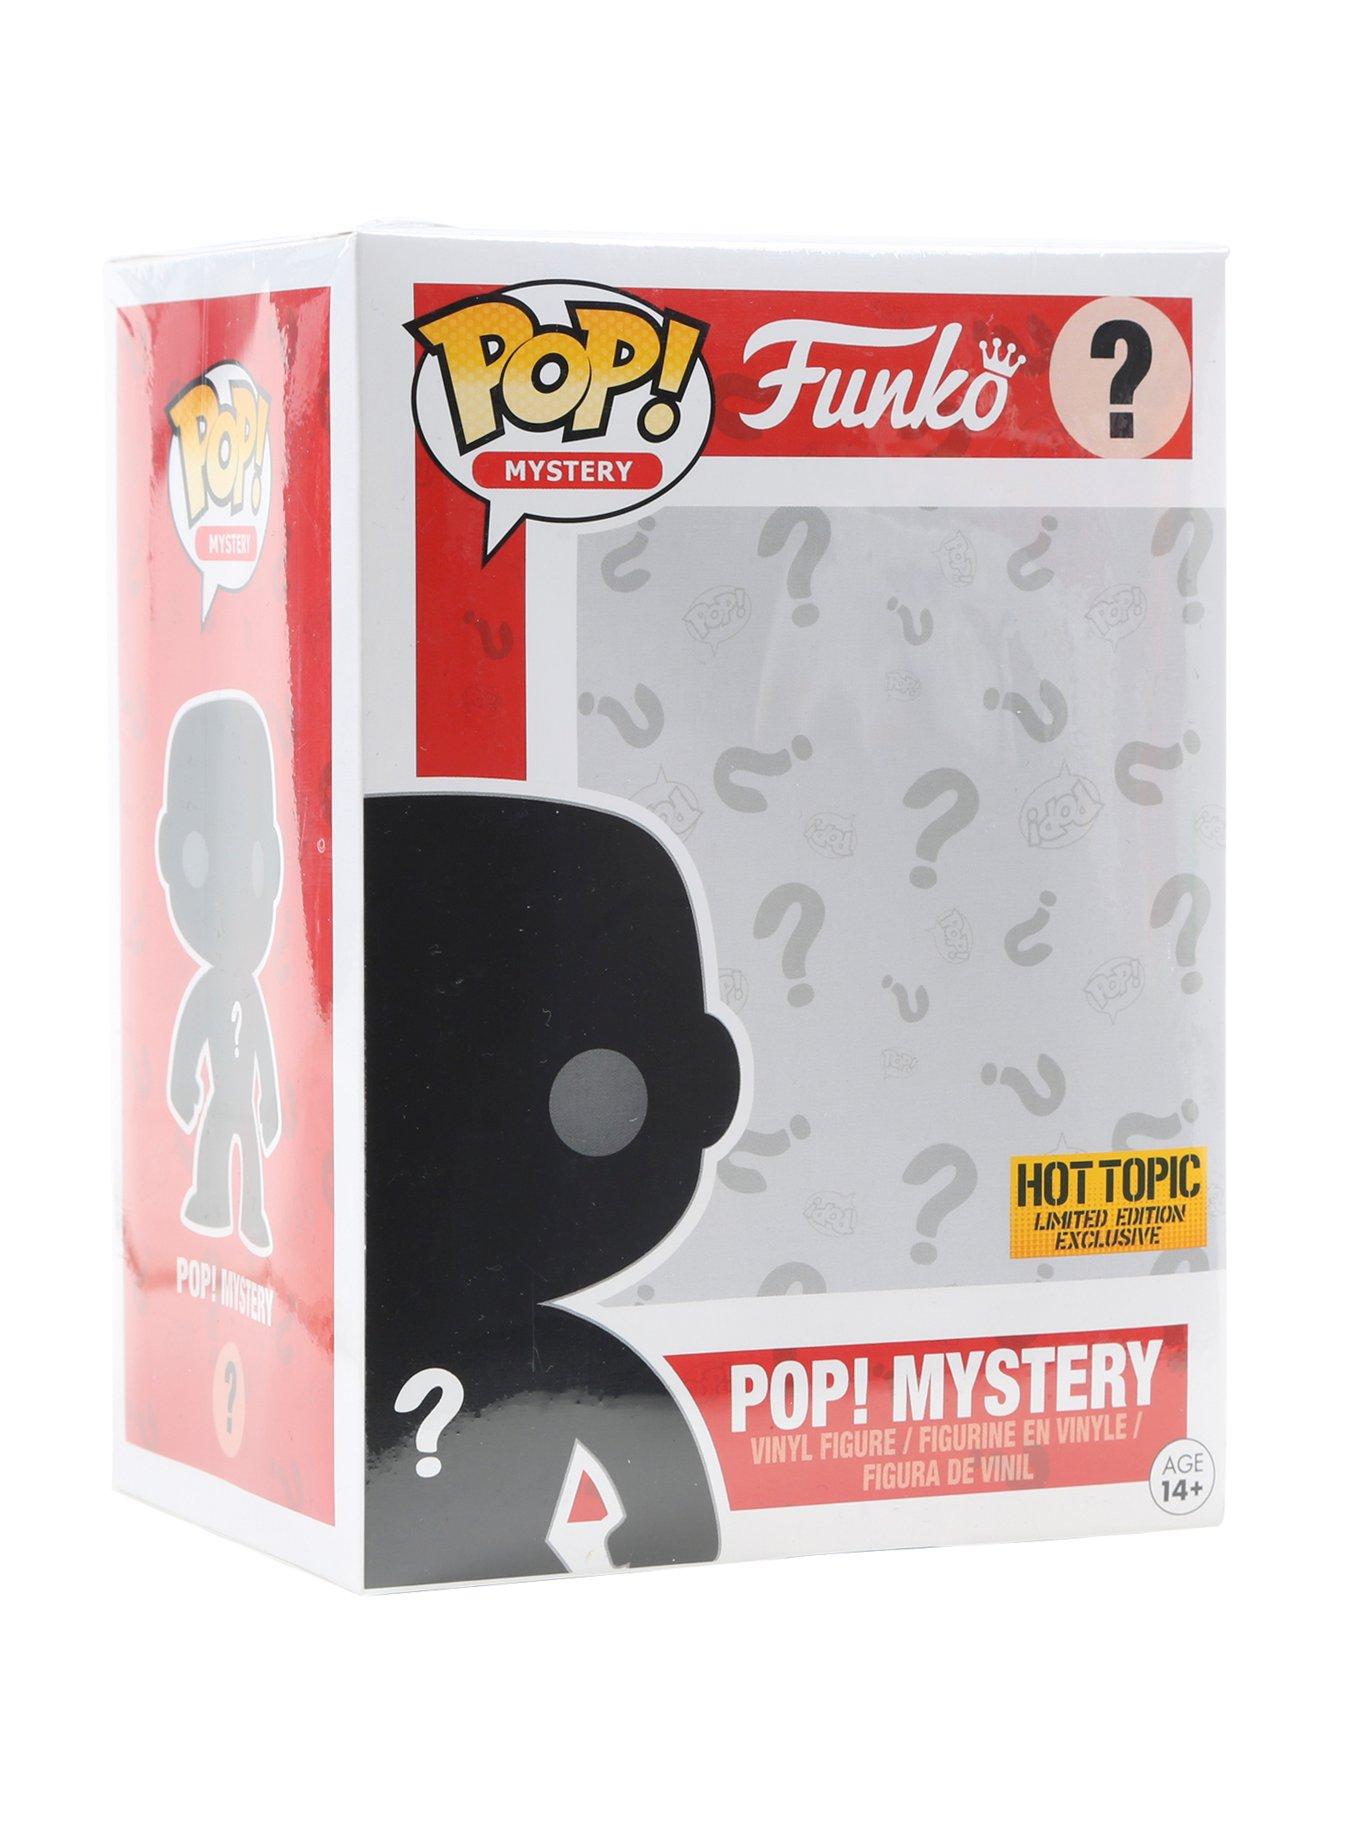 Buy Pop! Mystery at Funko.